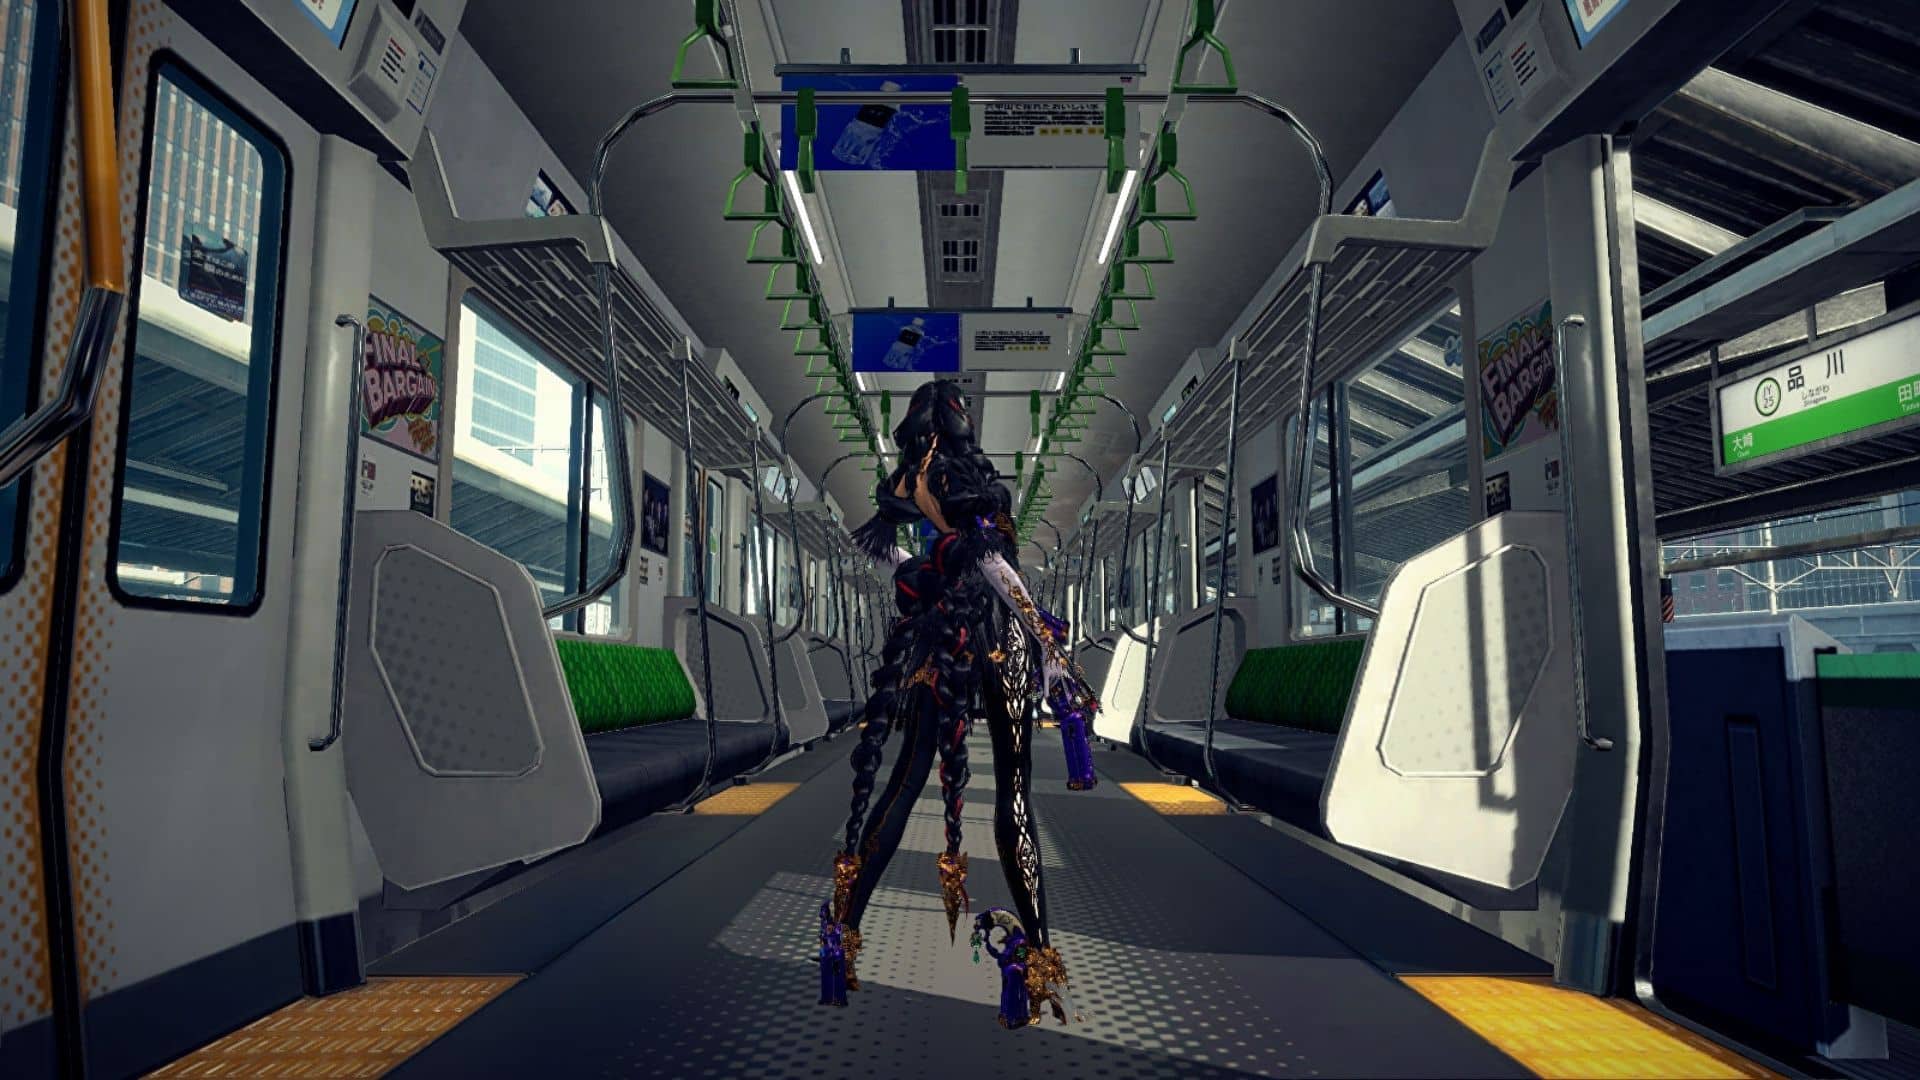 bayonetta standing in train